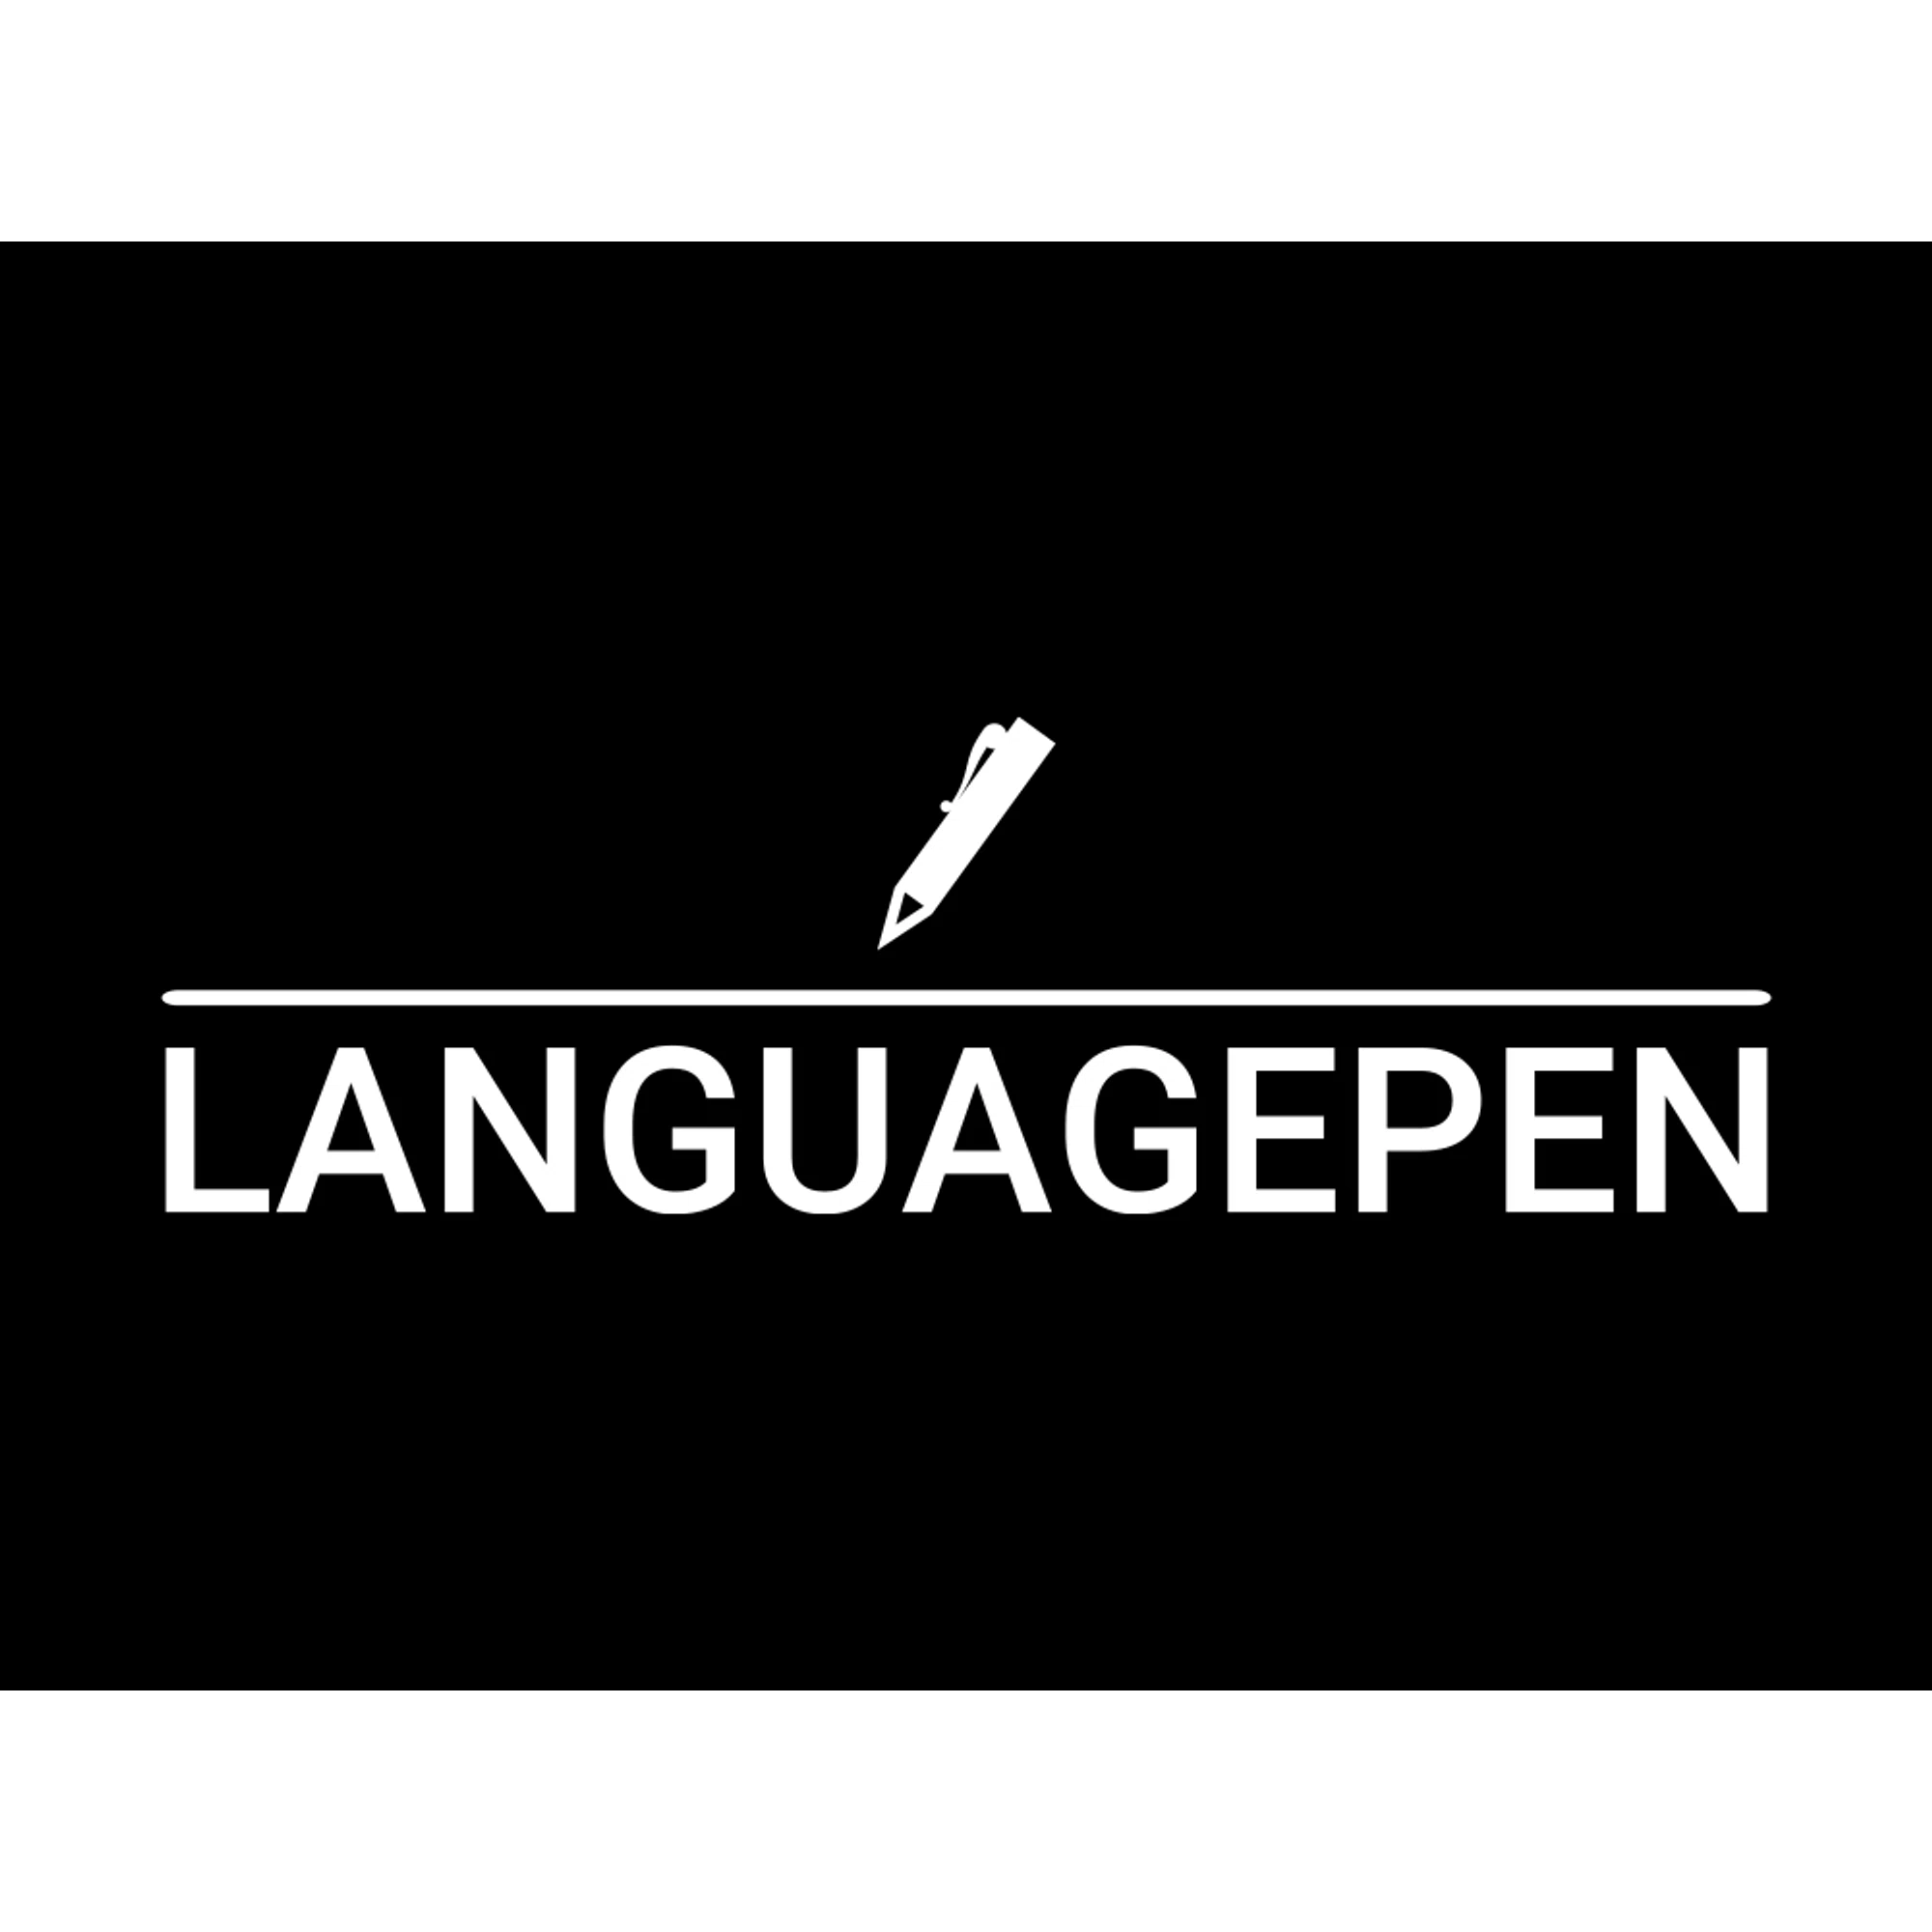 LanguagePen